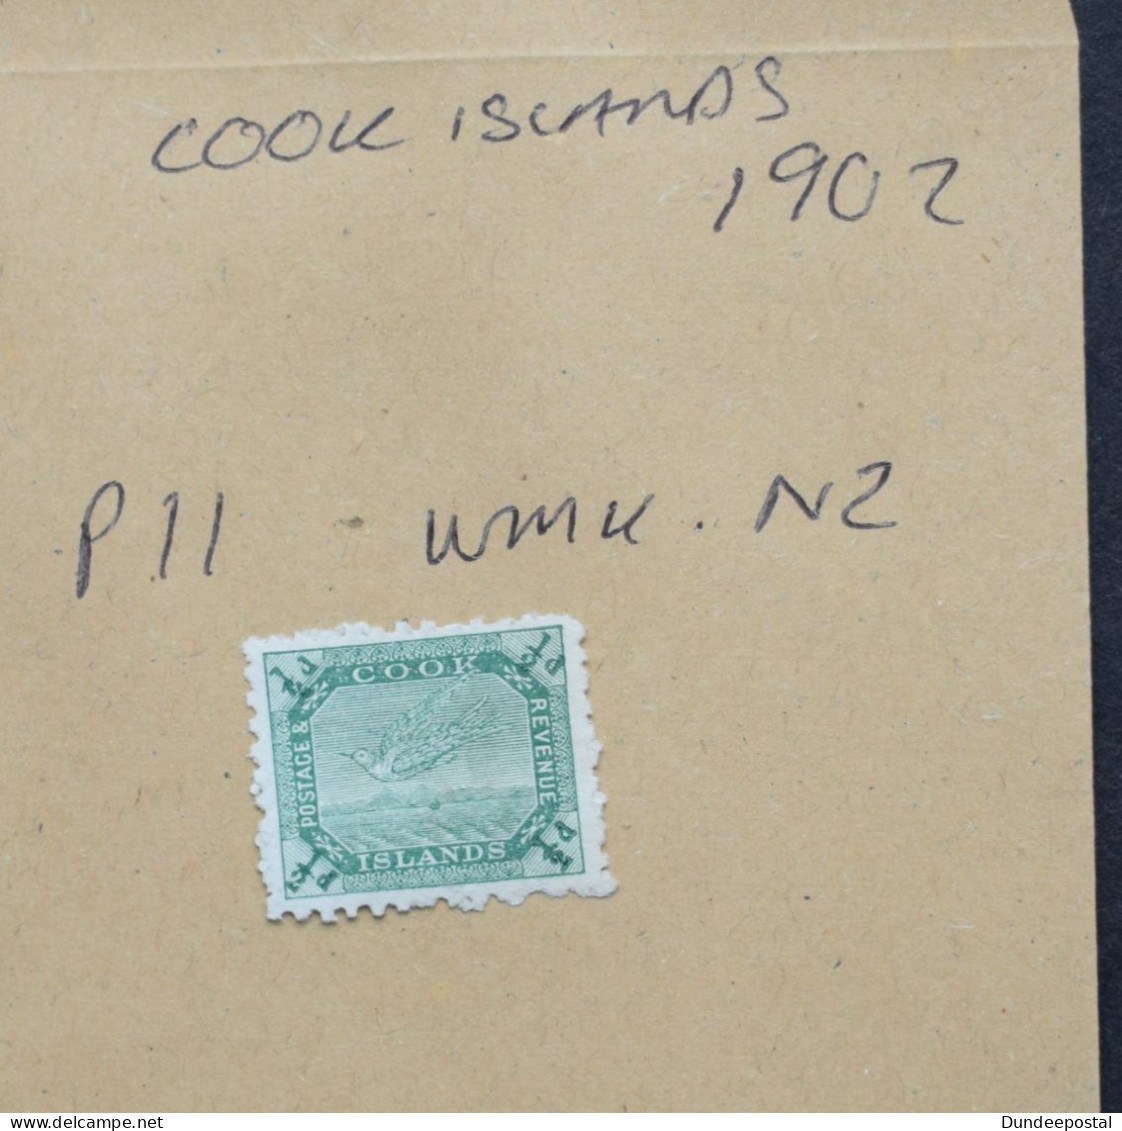 COOK ISLANDS  STAMPS P11 Wmk N2 1902   ~~L@@K~~ - Cocos (Keeling) Islands